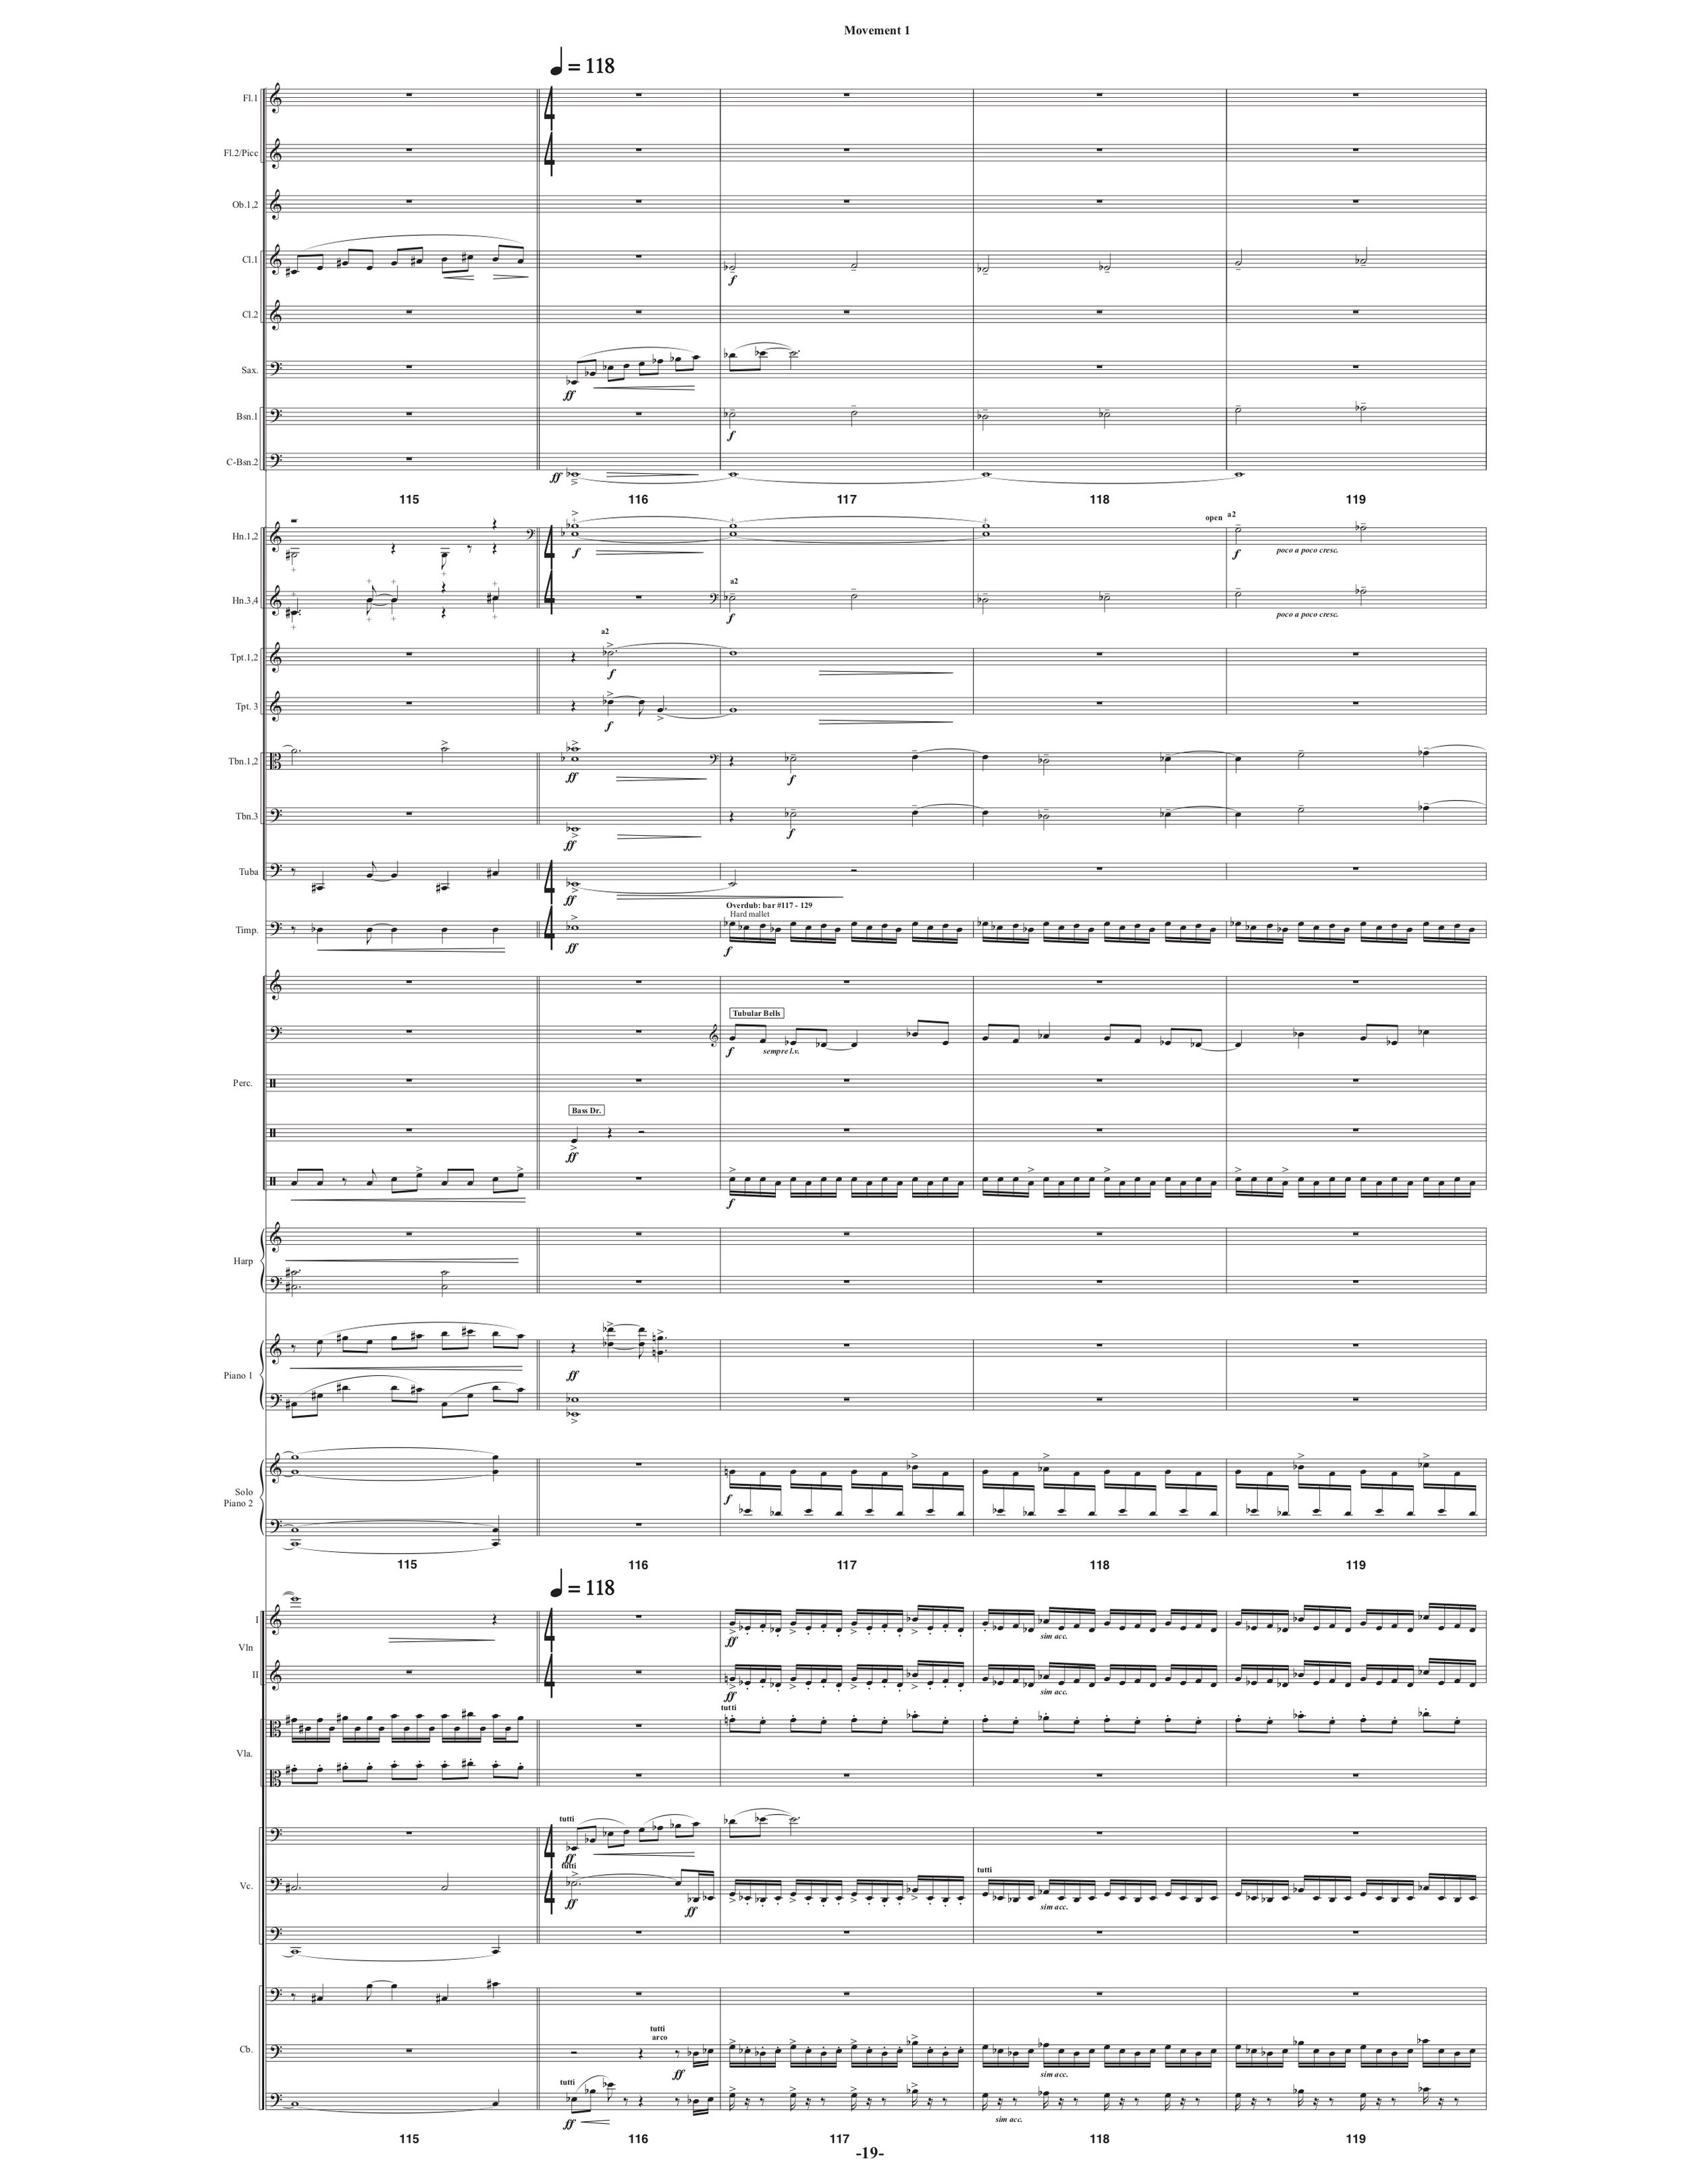 Symphony_Orch & 2 Pianos p24.jpg